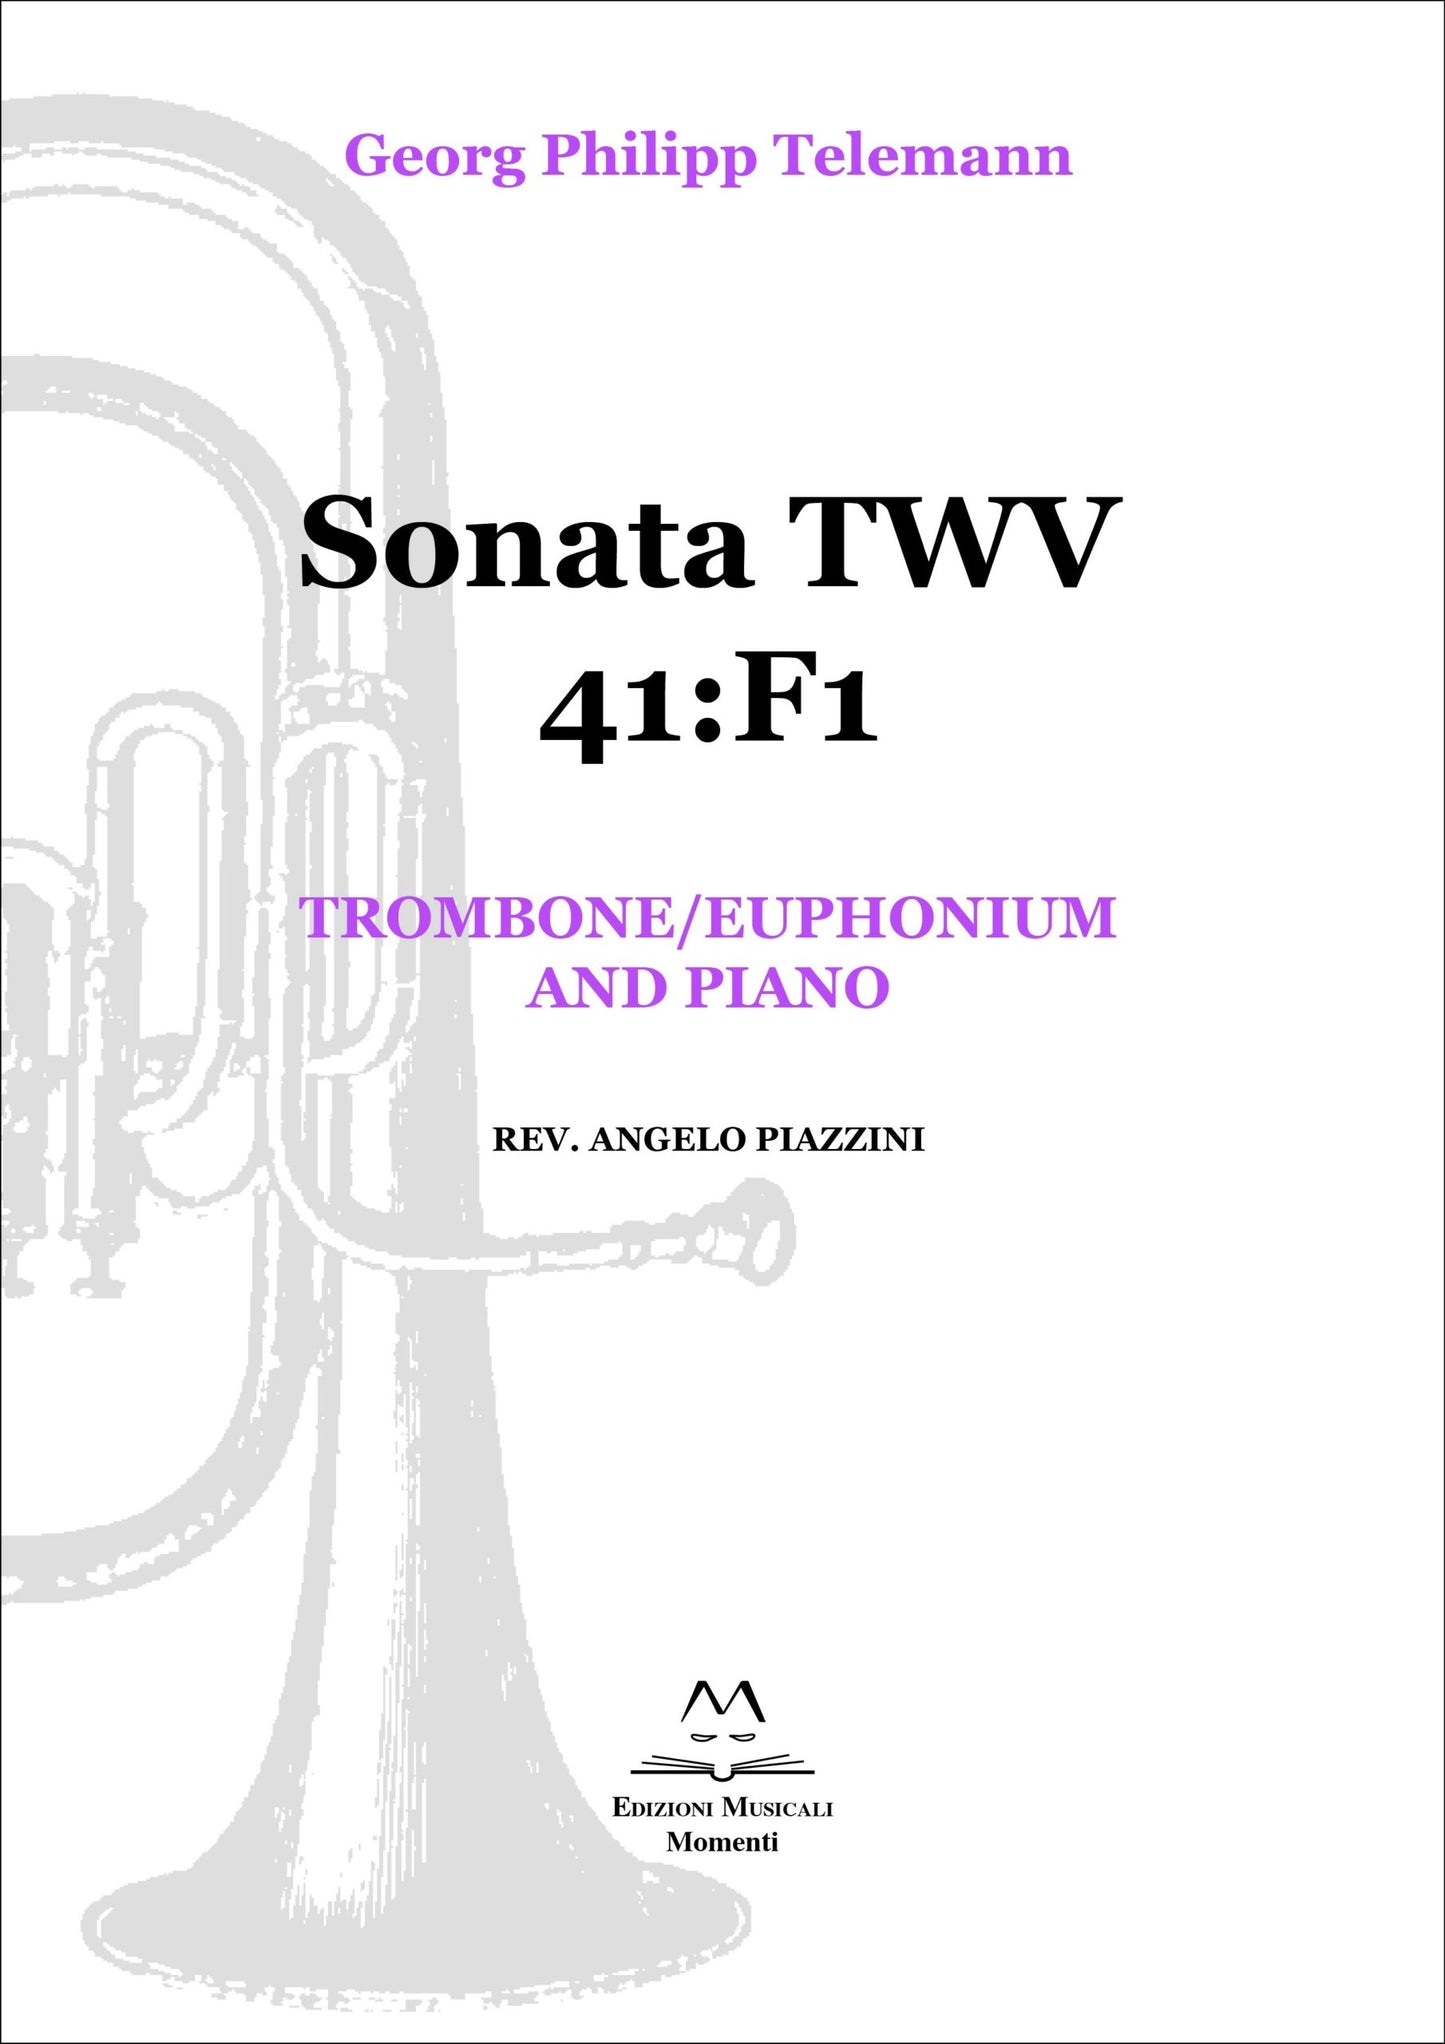 Sonata TWV 41:F1 - Trombone/euphonium and piano rev. Angelo Piazzini